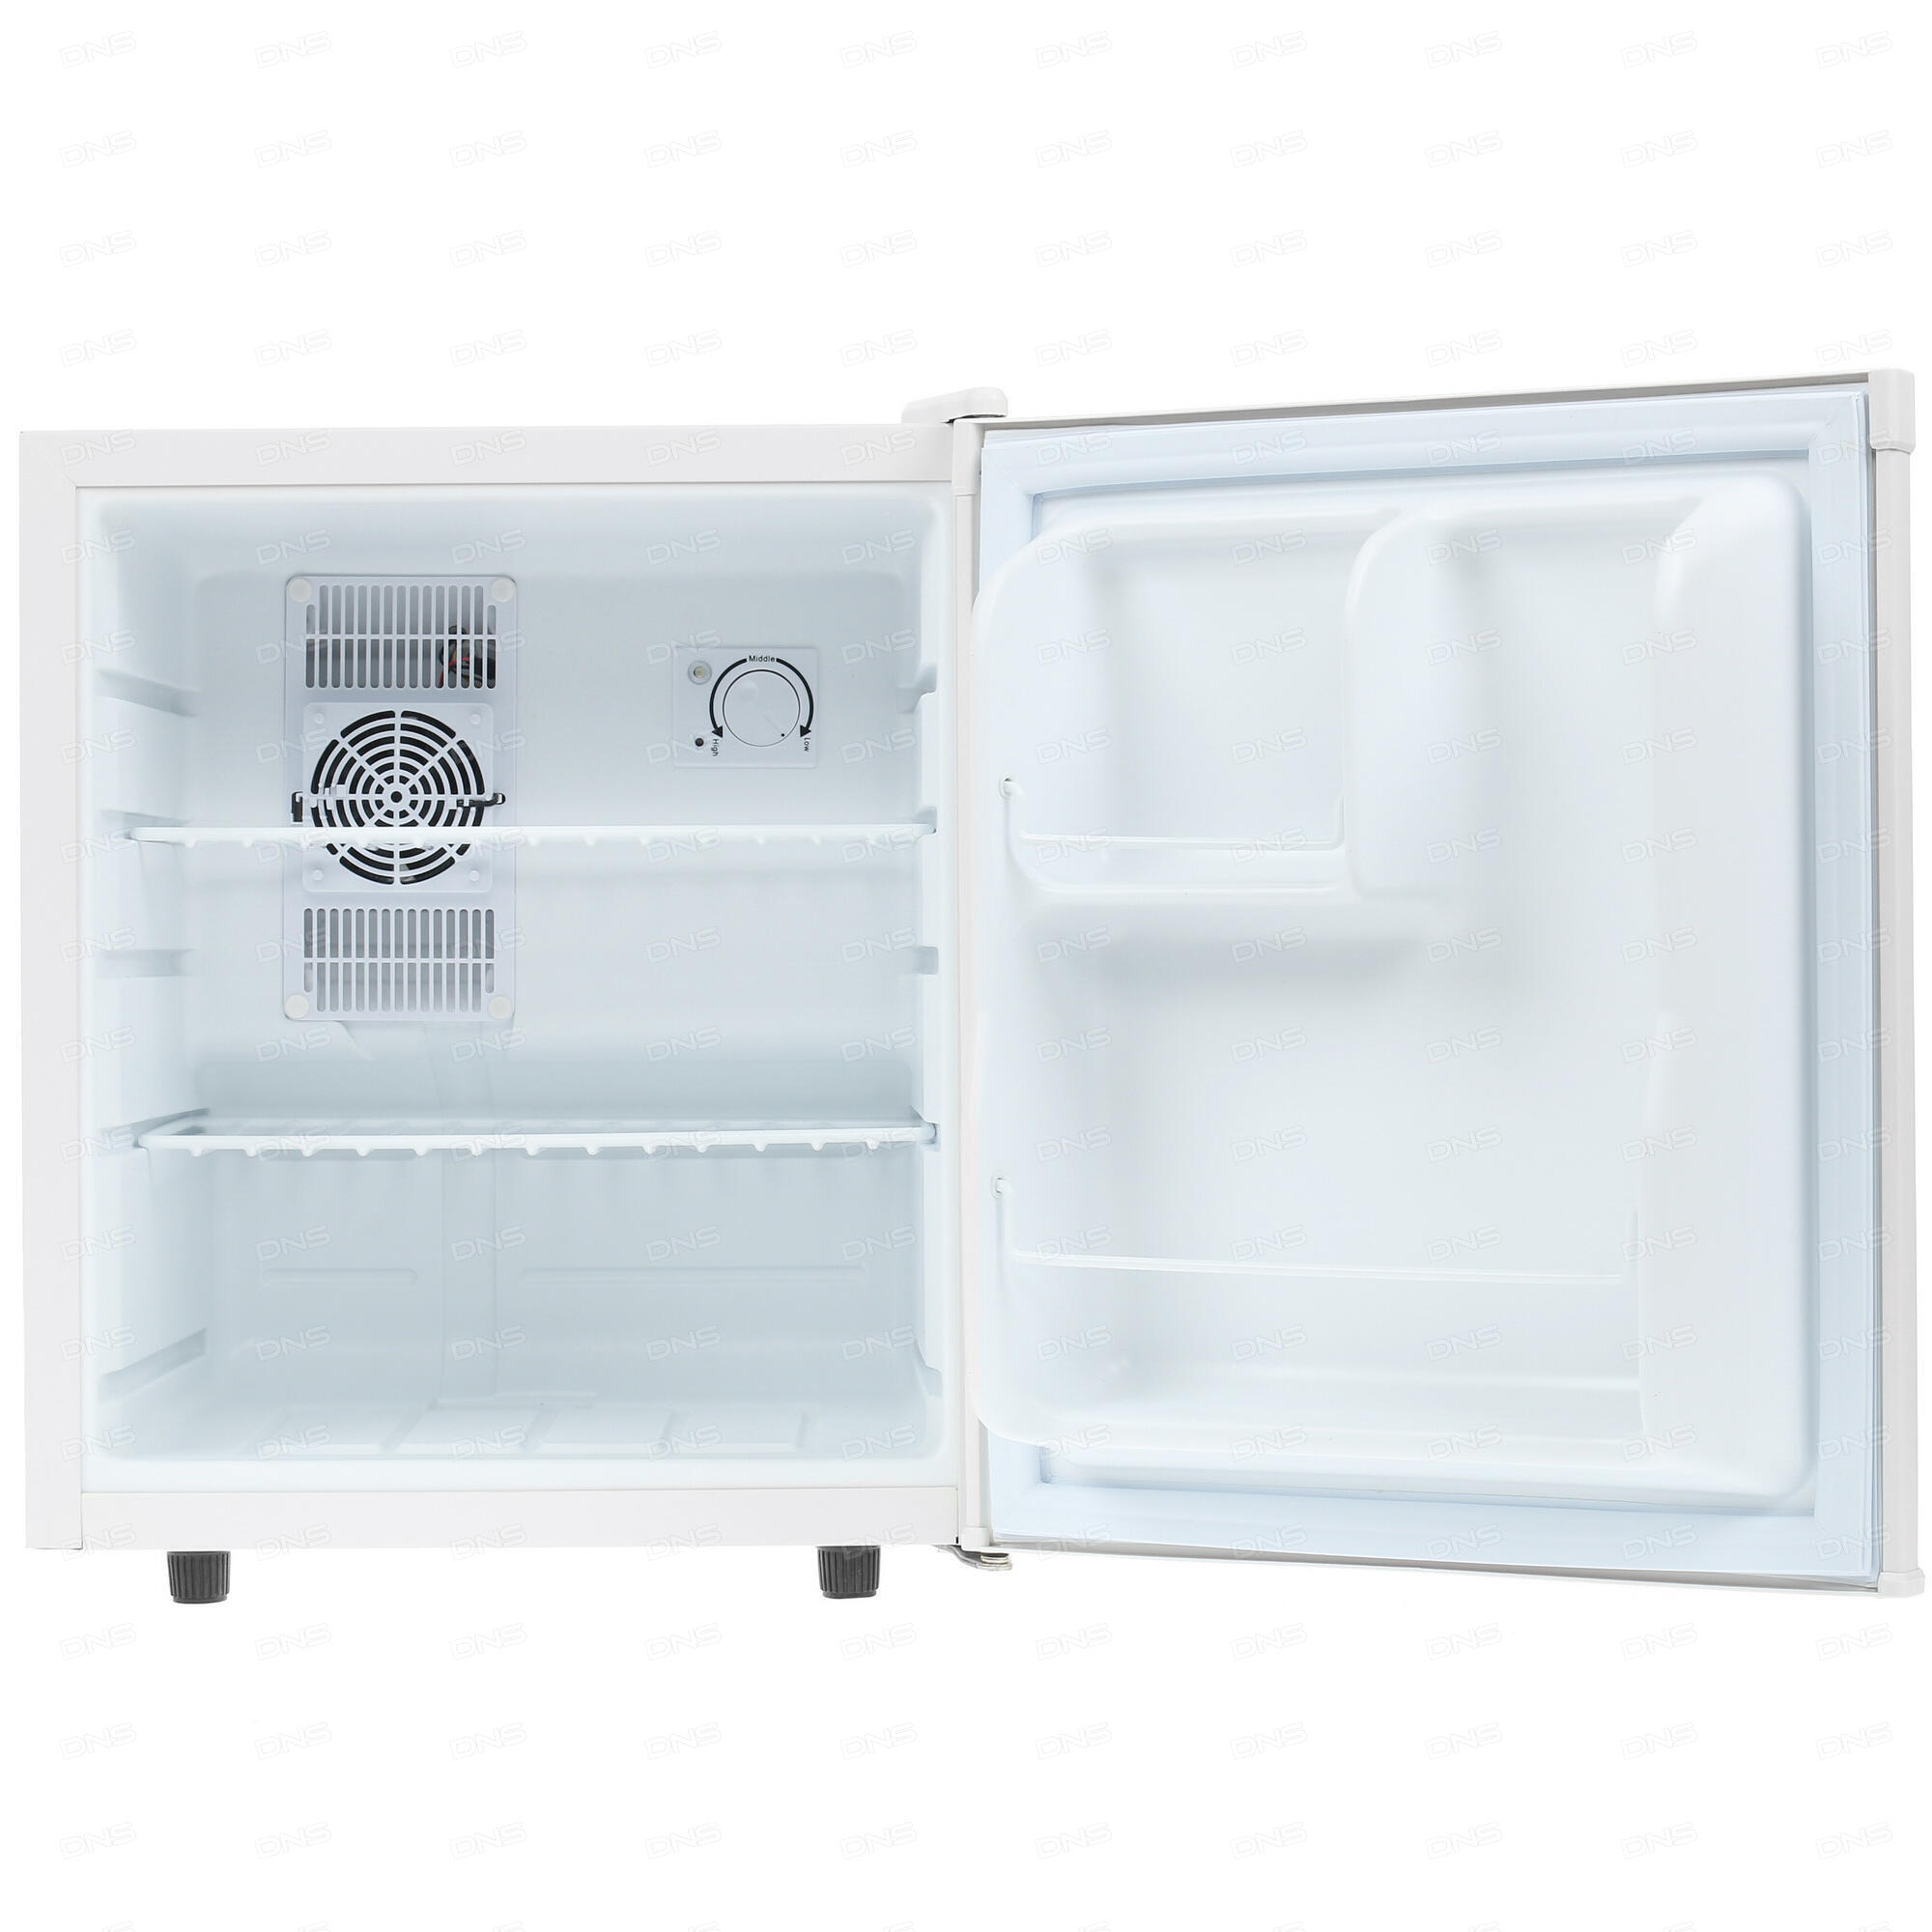 Холодильник gastrorag. Холодильник GASTRORAG BC-42b. Холодильный шкаф GASTRORAG BC-42b. Холодильник GASTRORAG 42b. Холодильник Profycool BC 42 B.